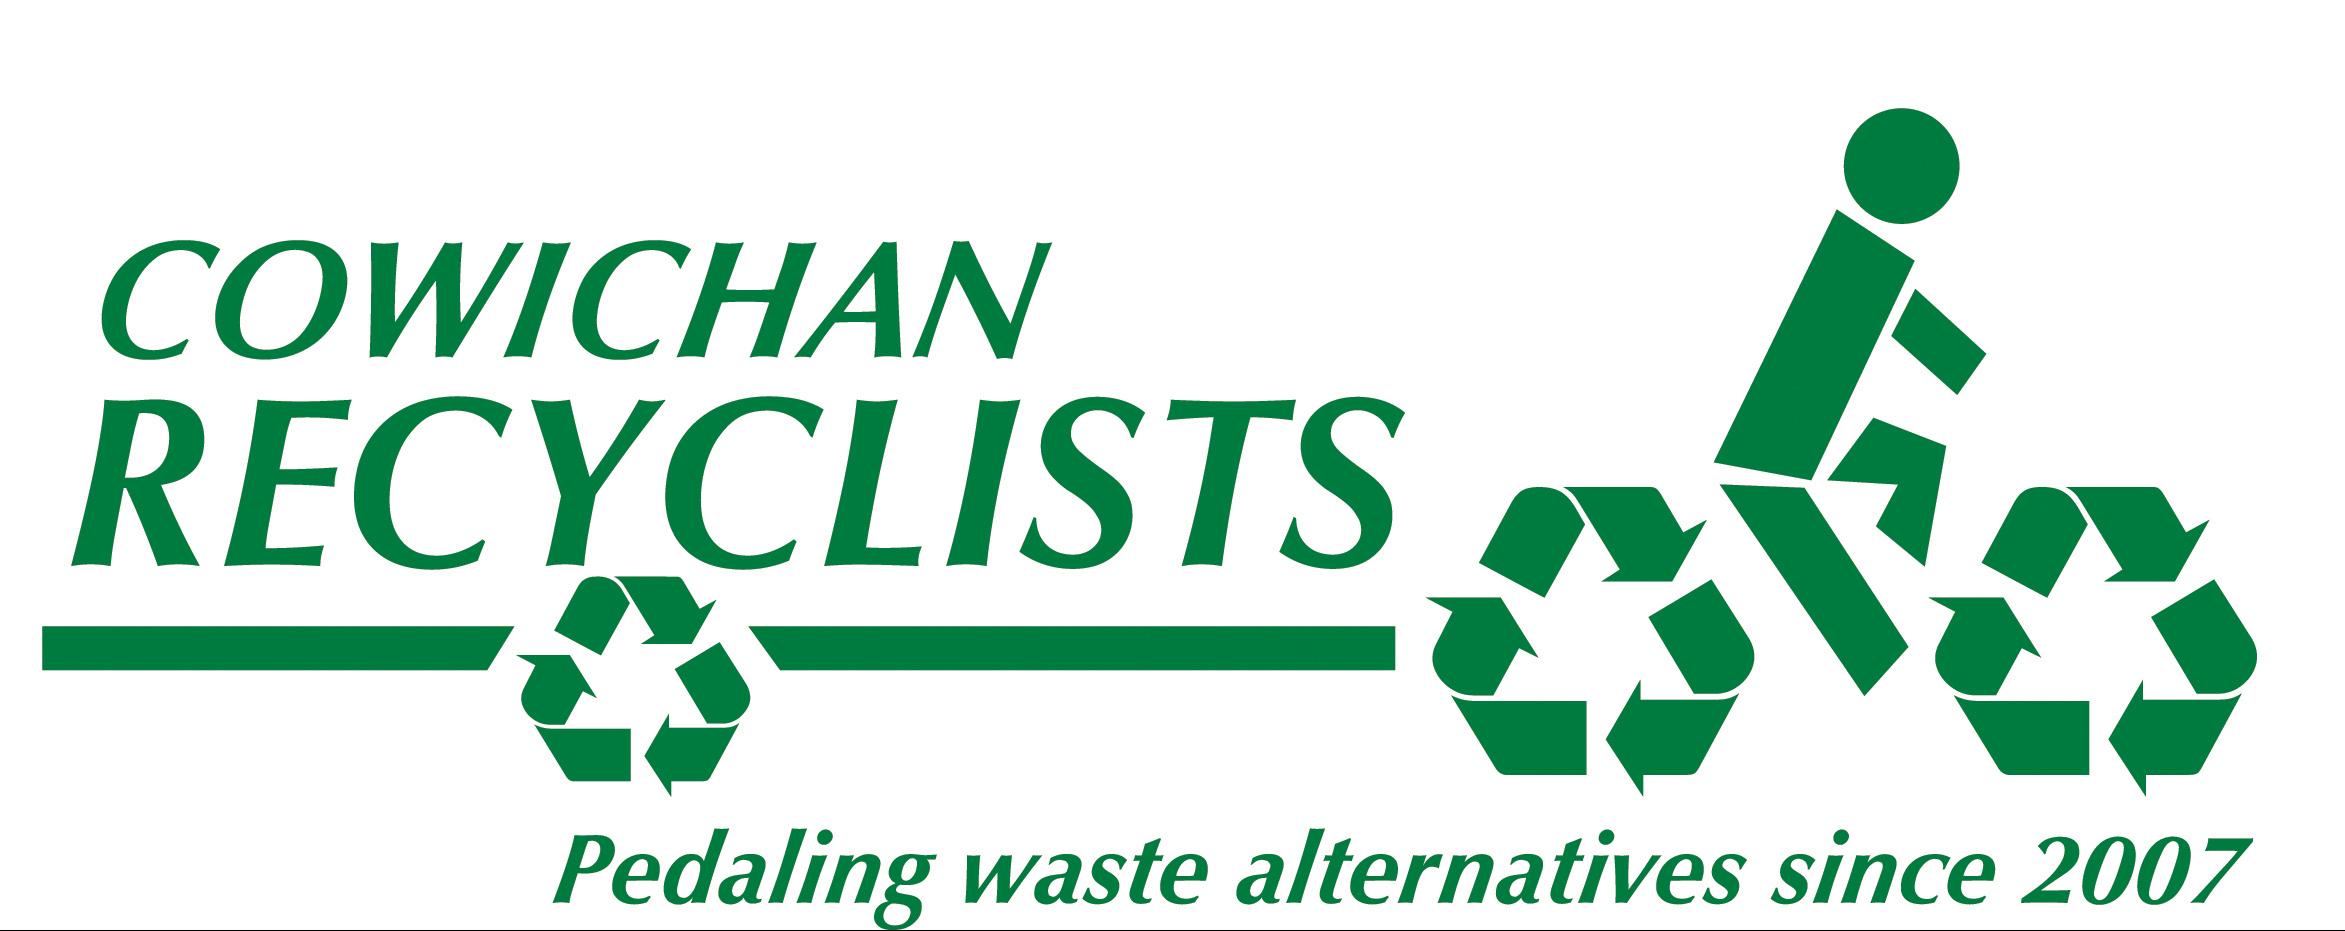 Cowichan Recyclists